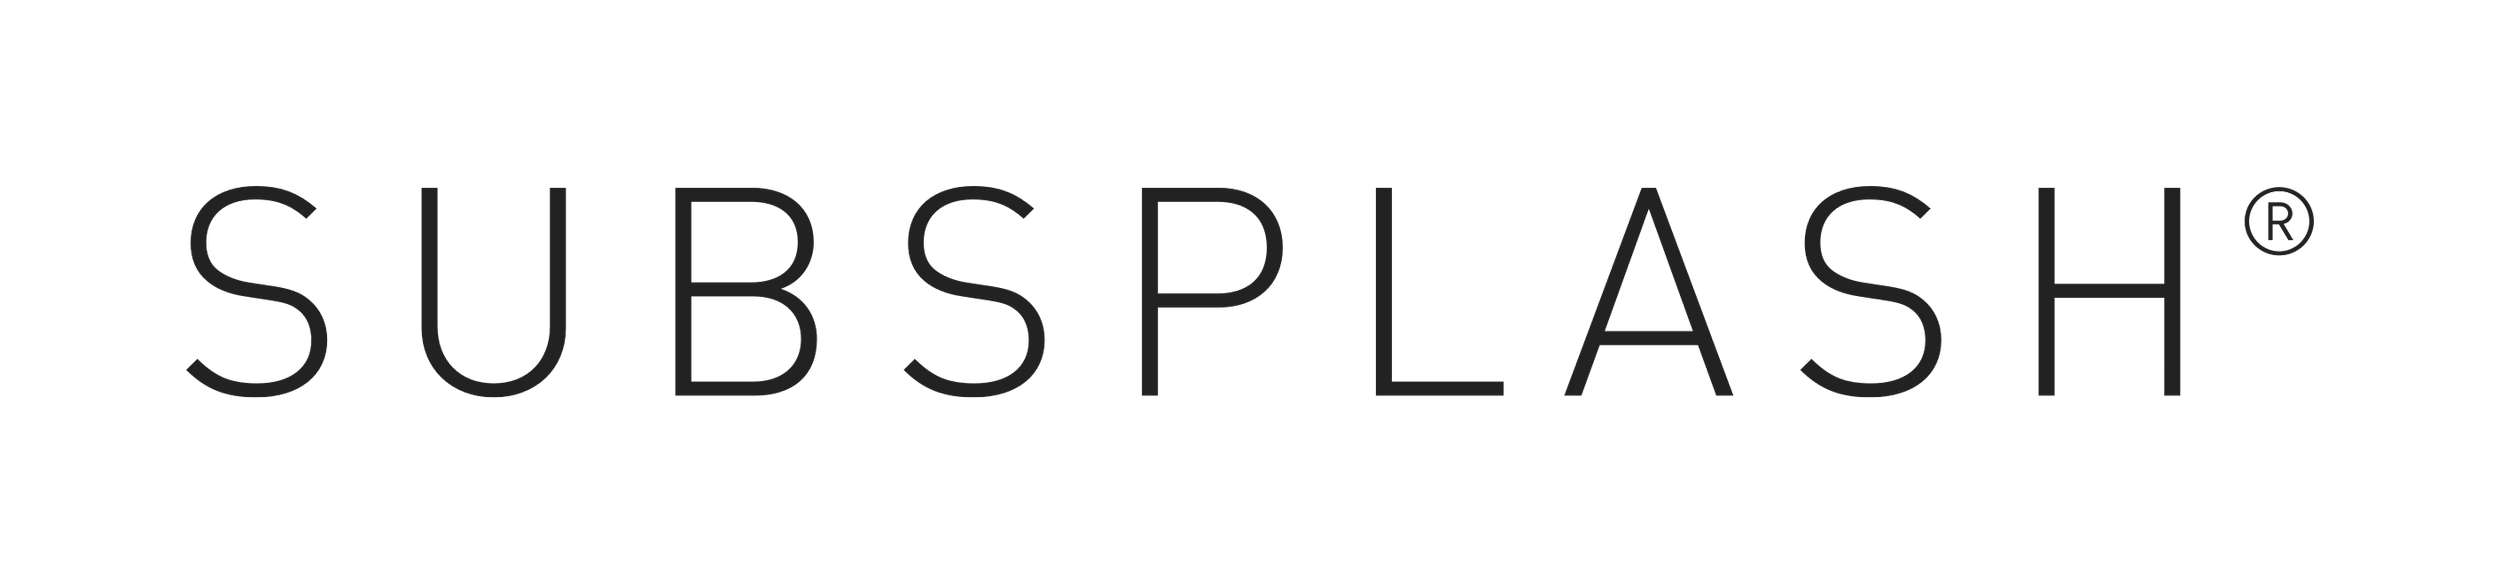 Subsplash Logo Black (1).png